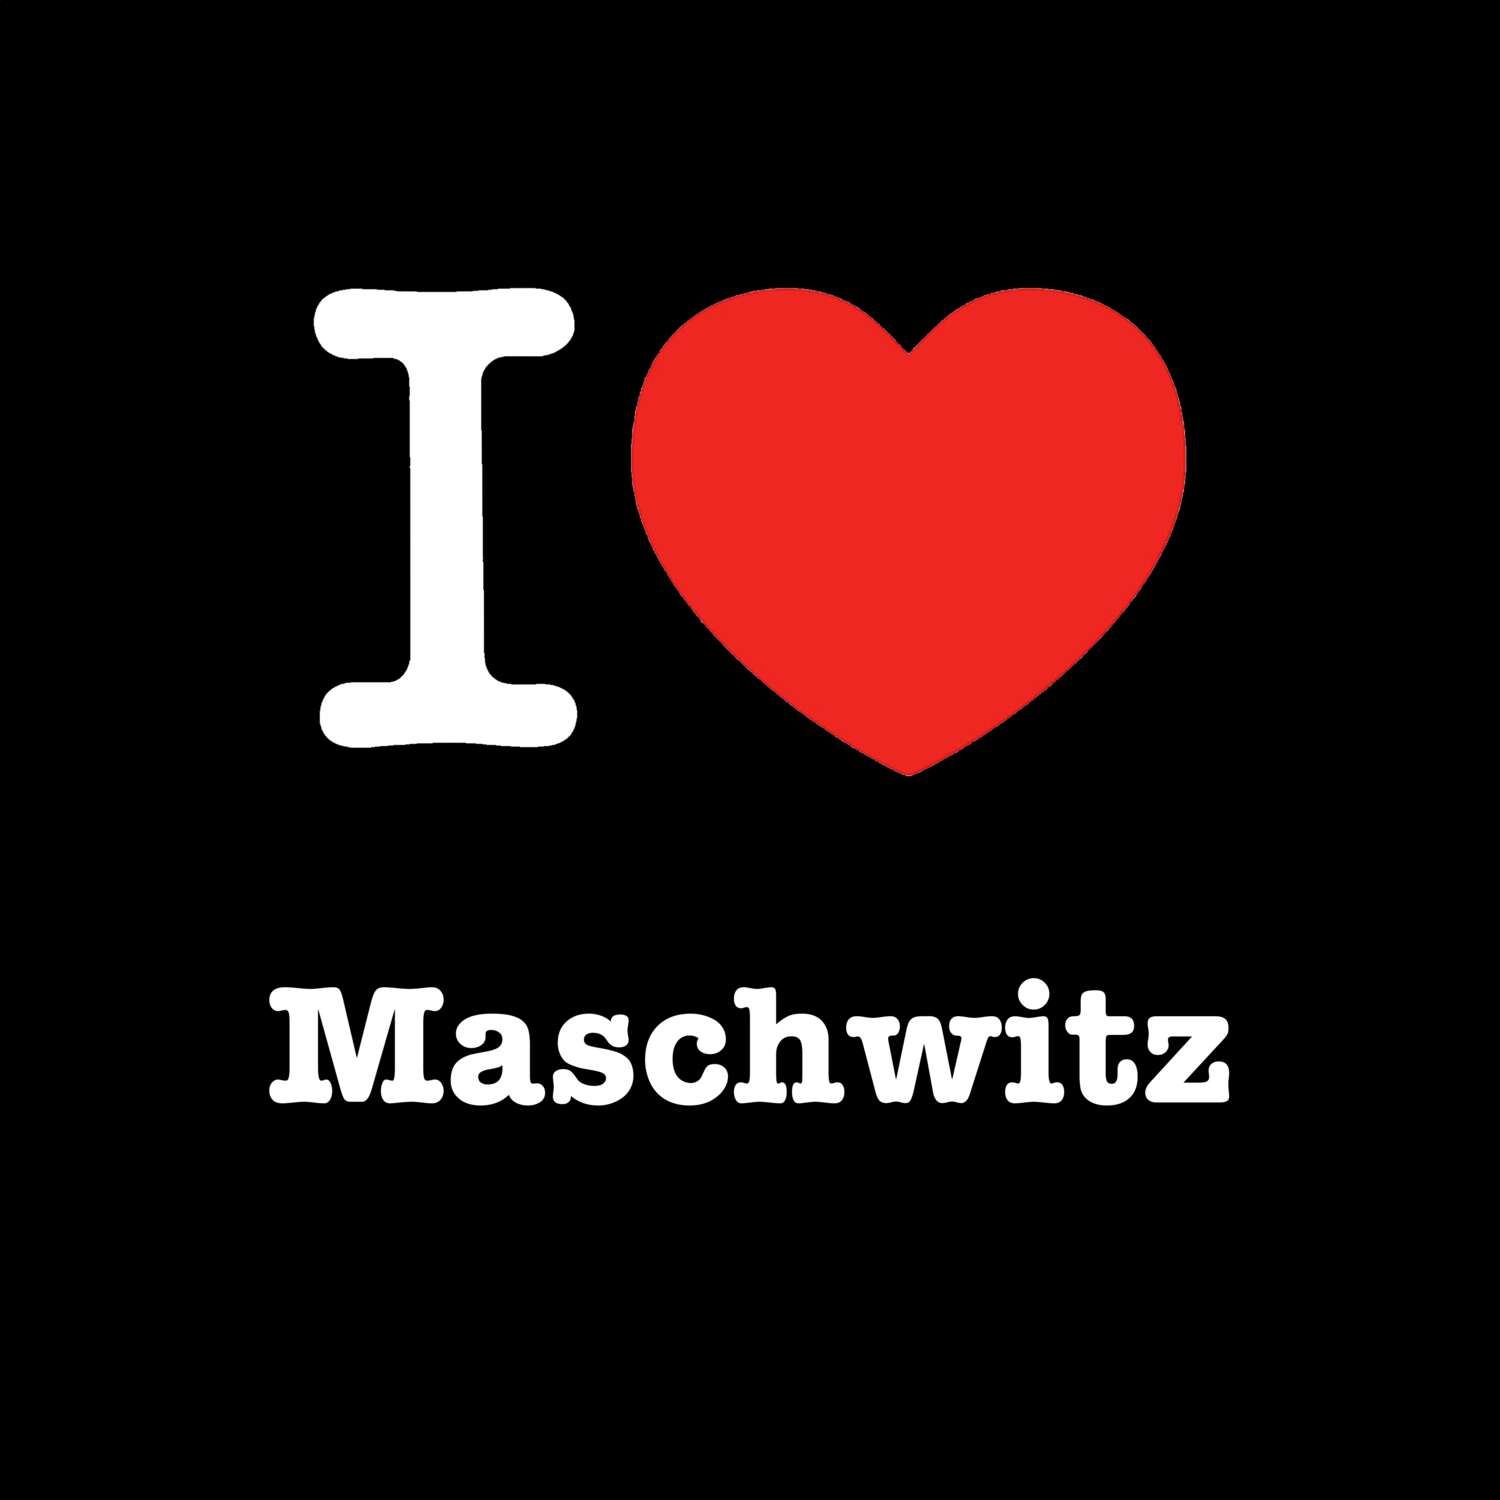 Maschwitz T-Shirt »I love«